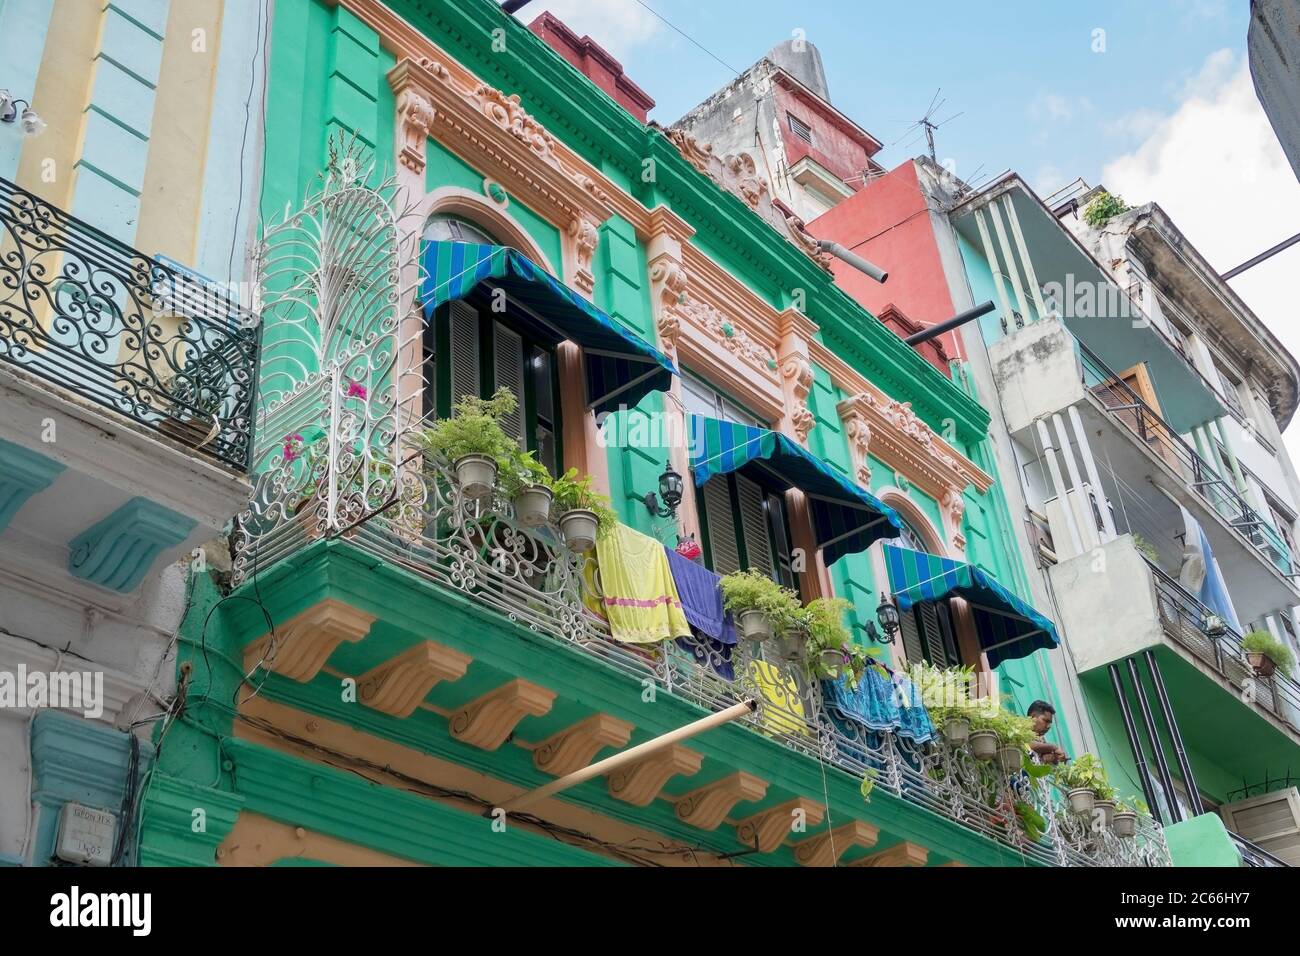 Cuba, Havana, artist quarter Barrio del Arte, colorful house facade with contrasting stucco Stock Photo